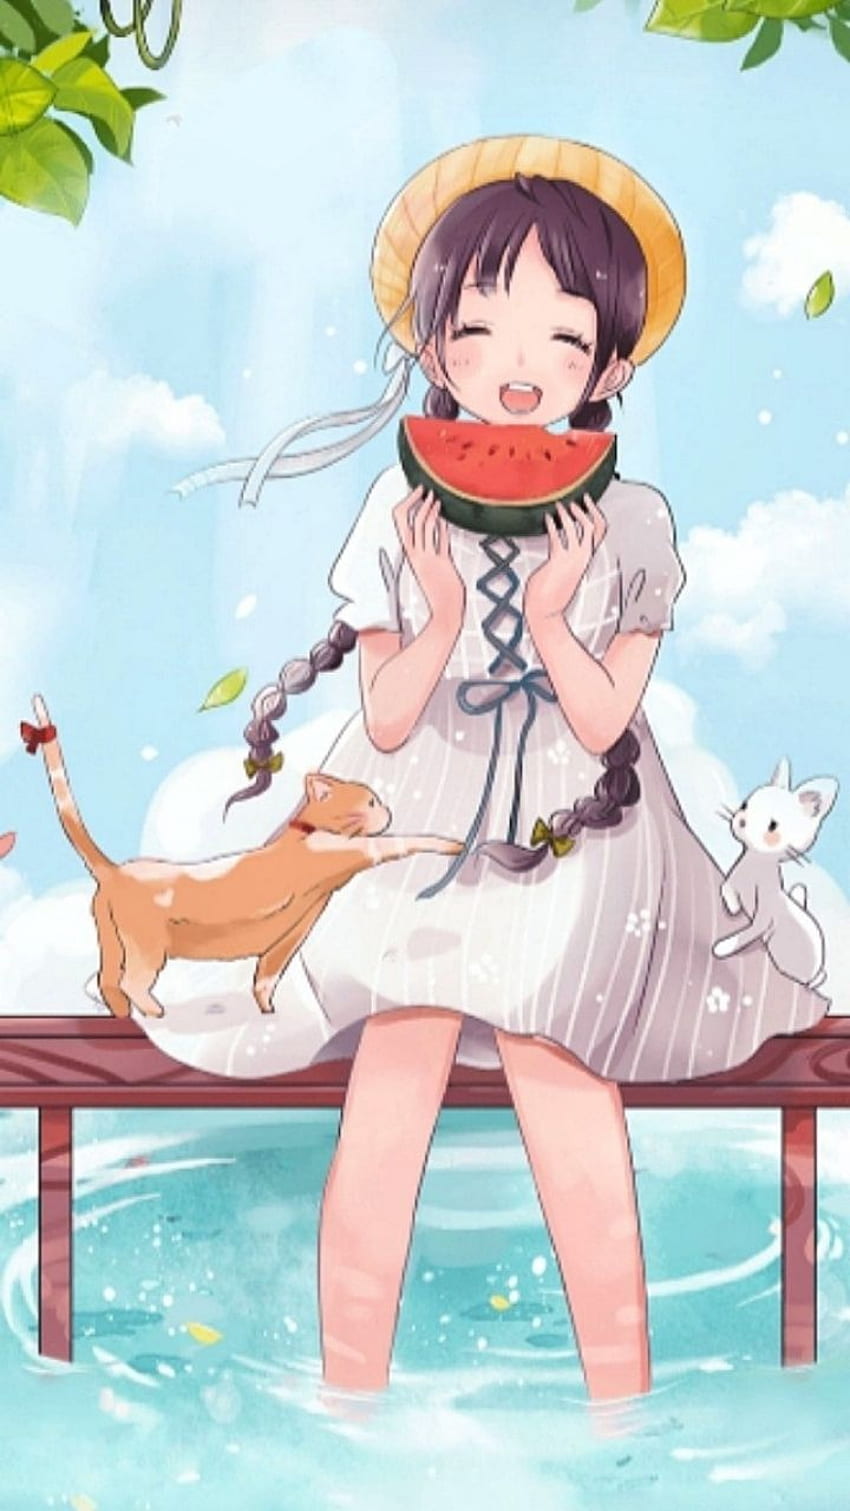 Anime girl, cloud, sky, cat, rabbit, watermelon, cute, water, summer HD ...